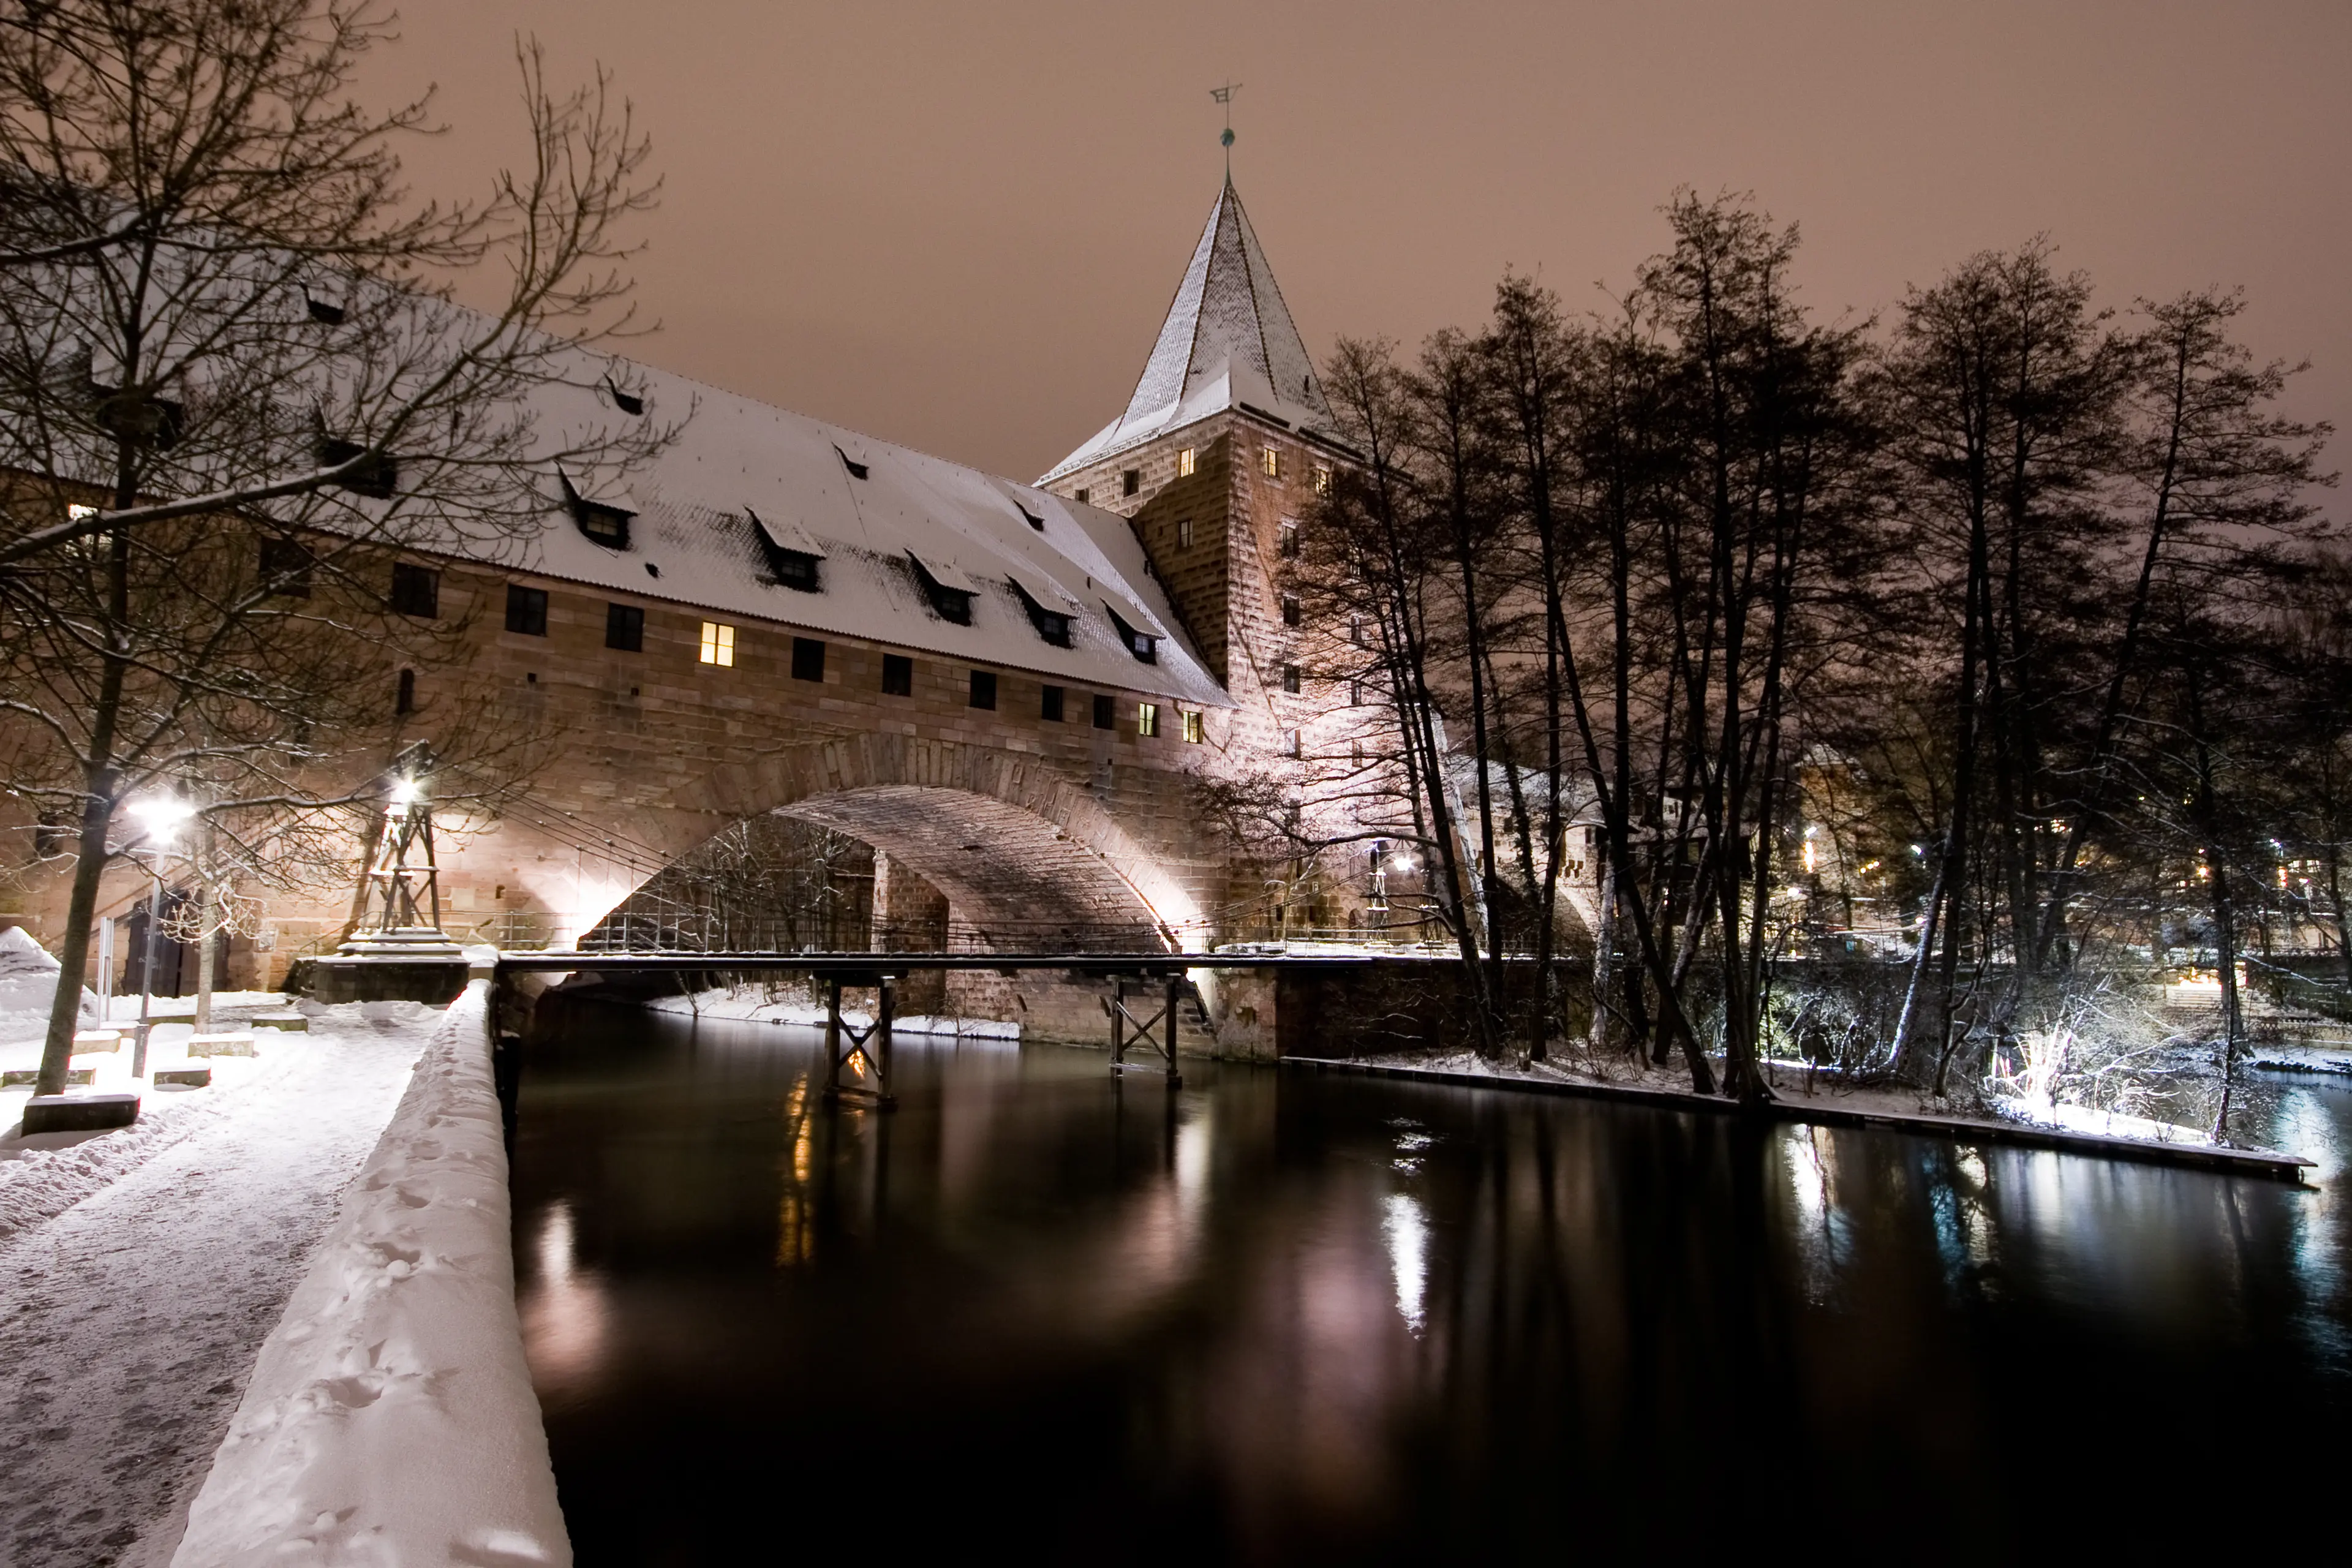 3-Day Festive Getaway in Nuremberg, Germany for Christmas